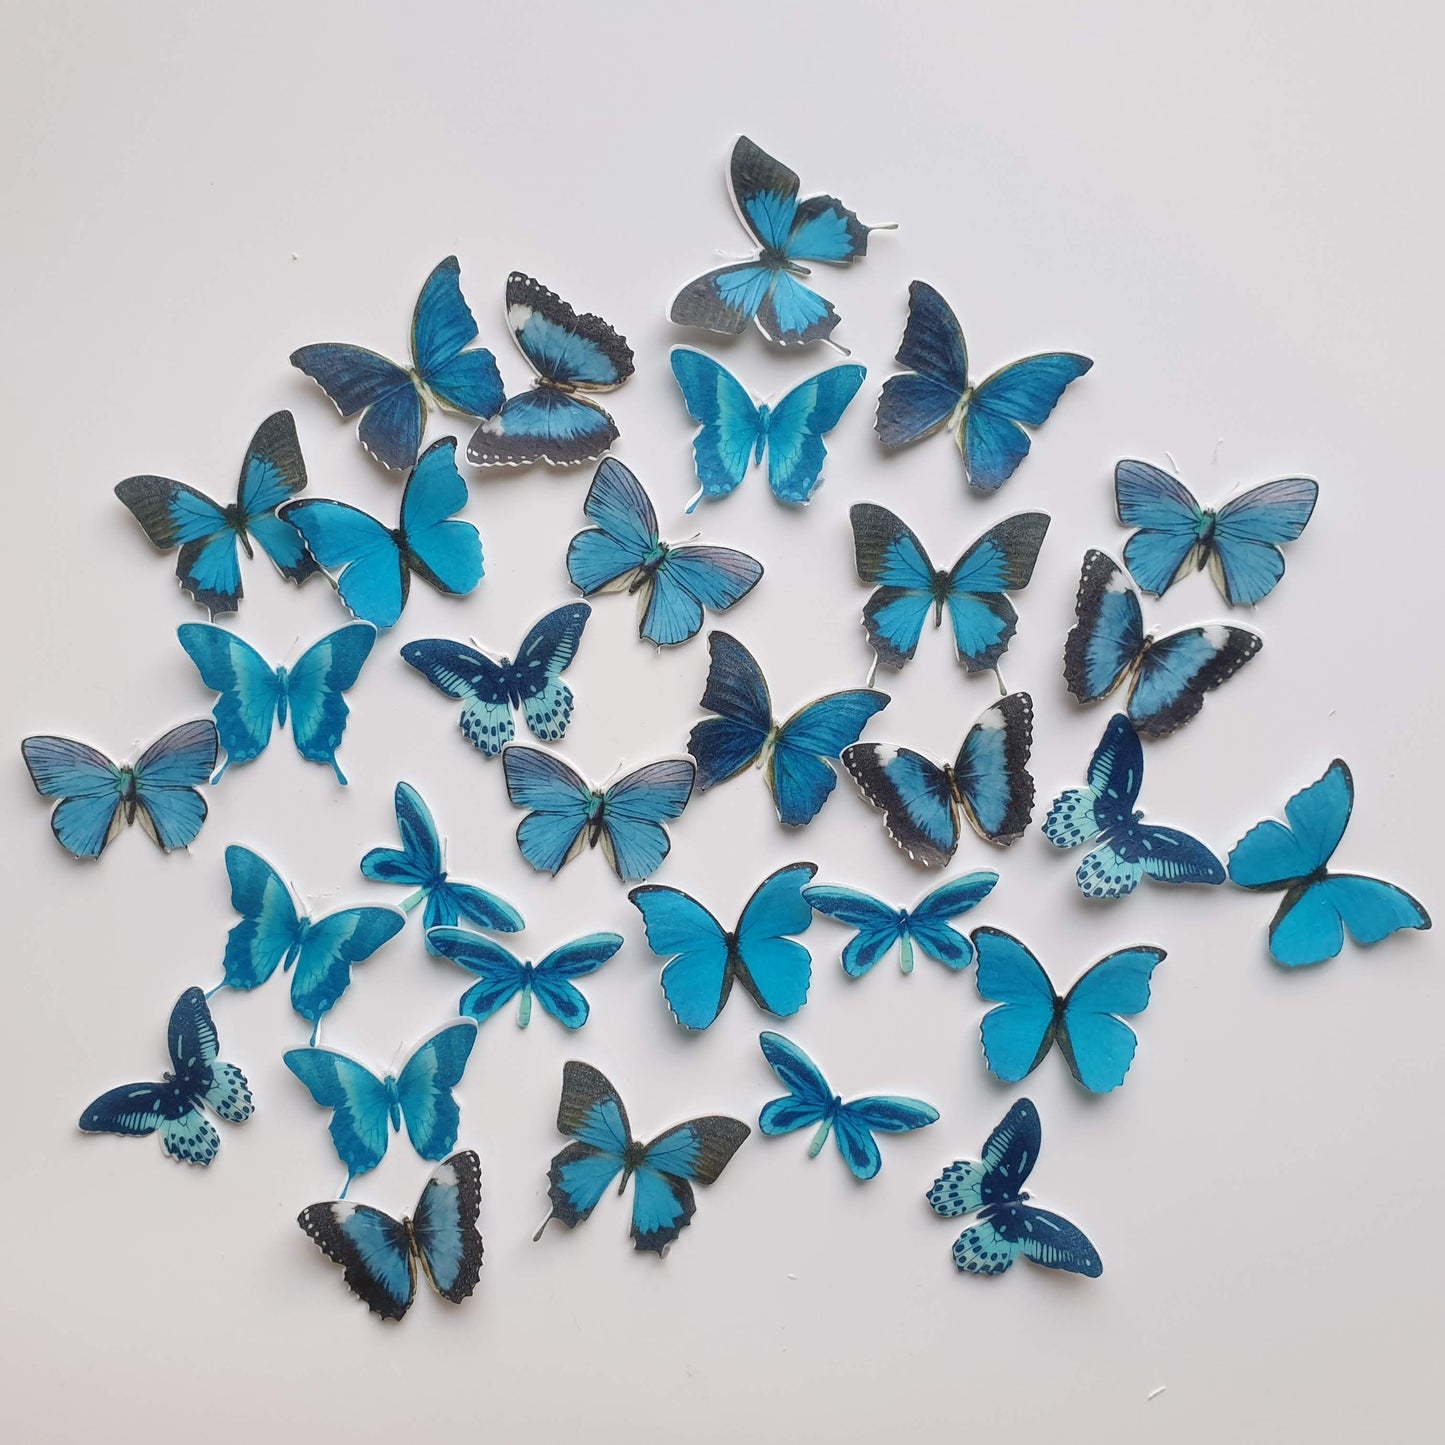 Blue Edible Wafer Butterflies - Medium - 32pcs Edible Cake Topper, Edible Cake Image, ,printsoncakes